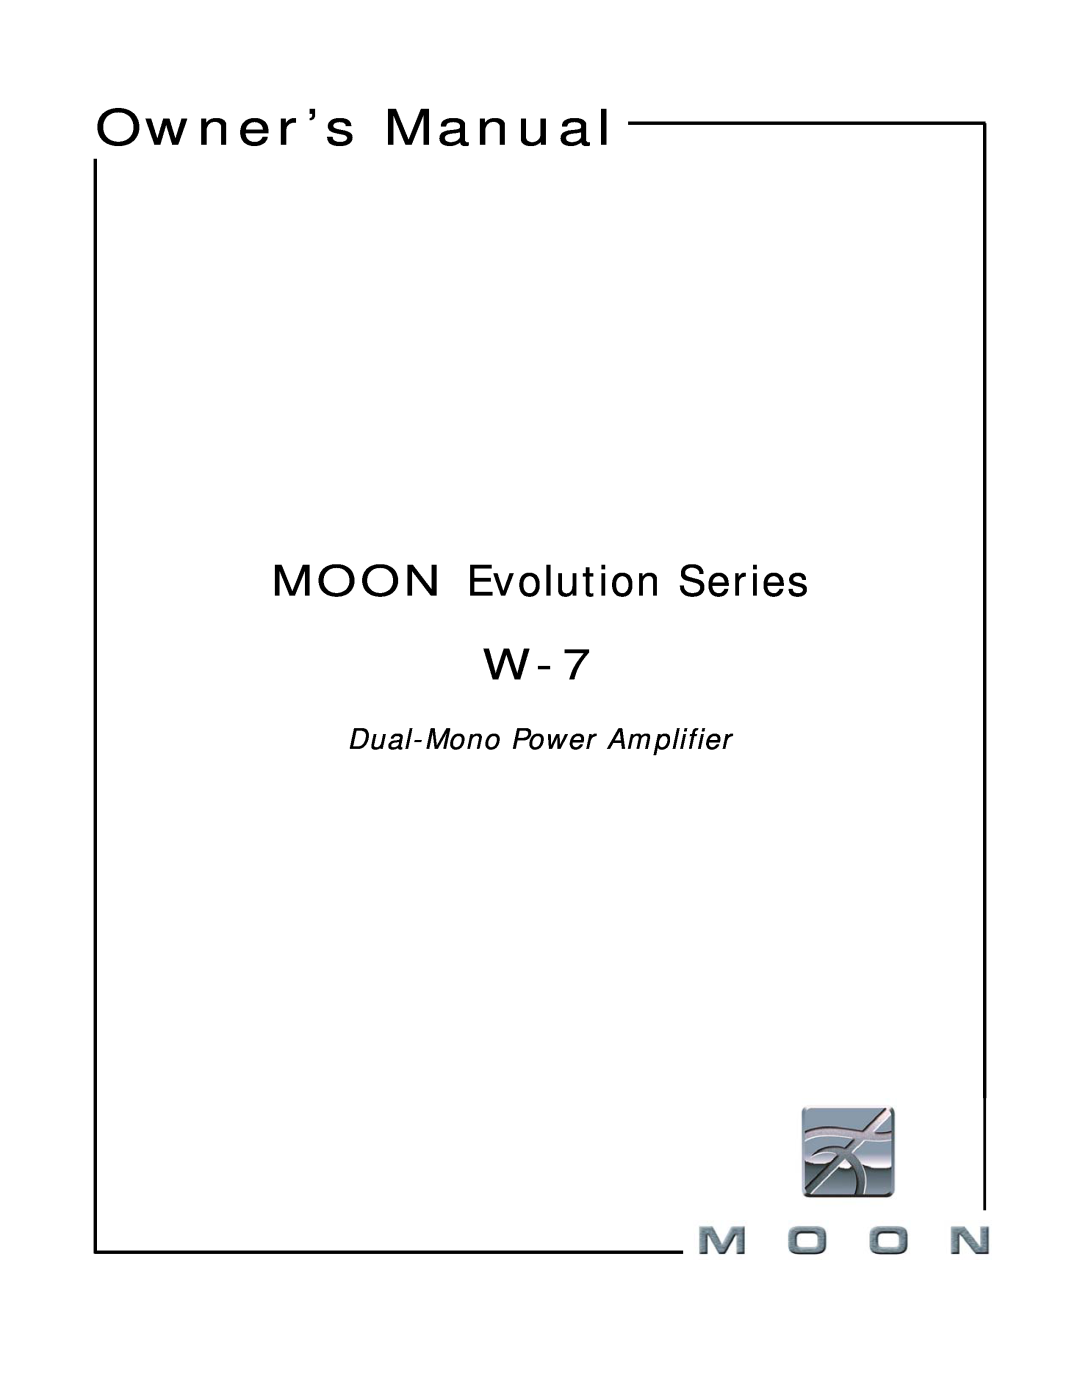 Simaudio owner manual MOON Evolution Series W-7, Dual-MonoPower Amplifier 